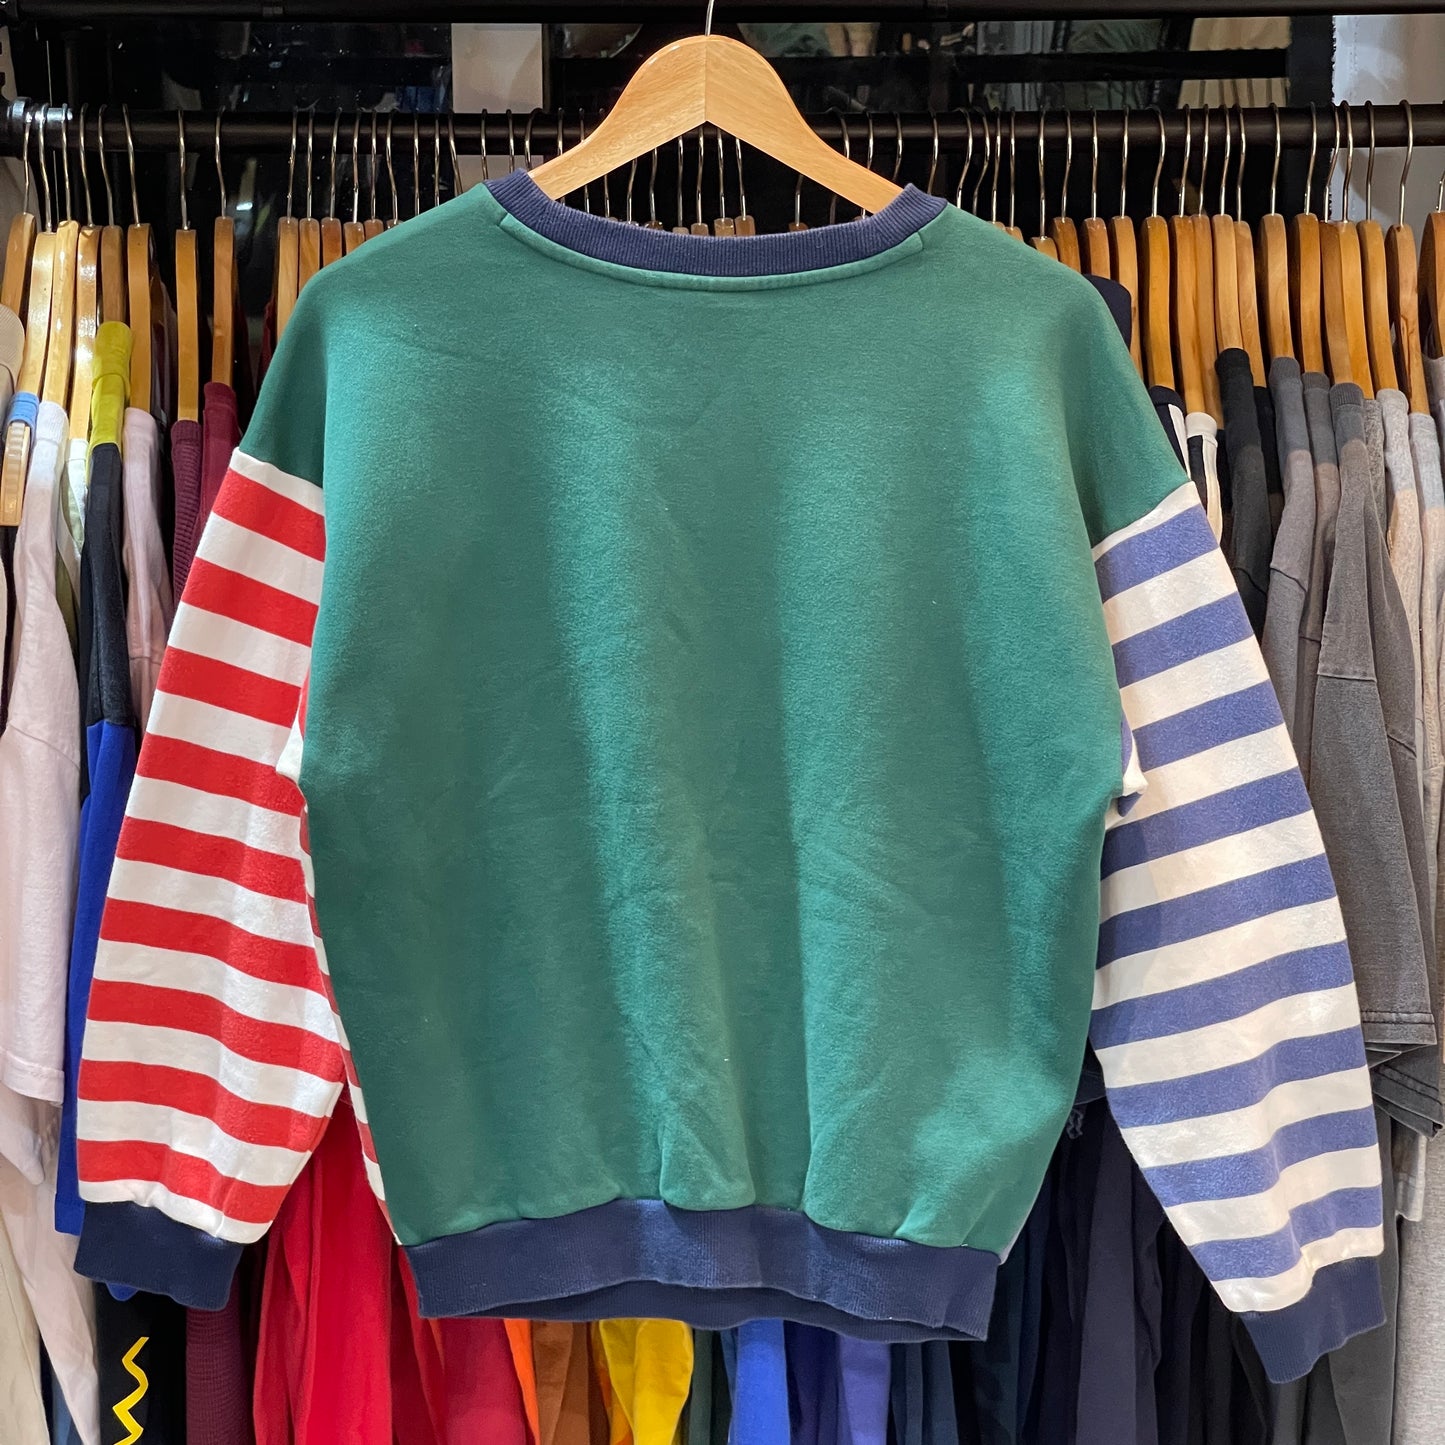 Adidas Original Star 2016 Colorful Sweatshirt